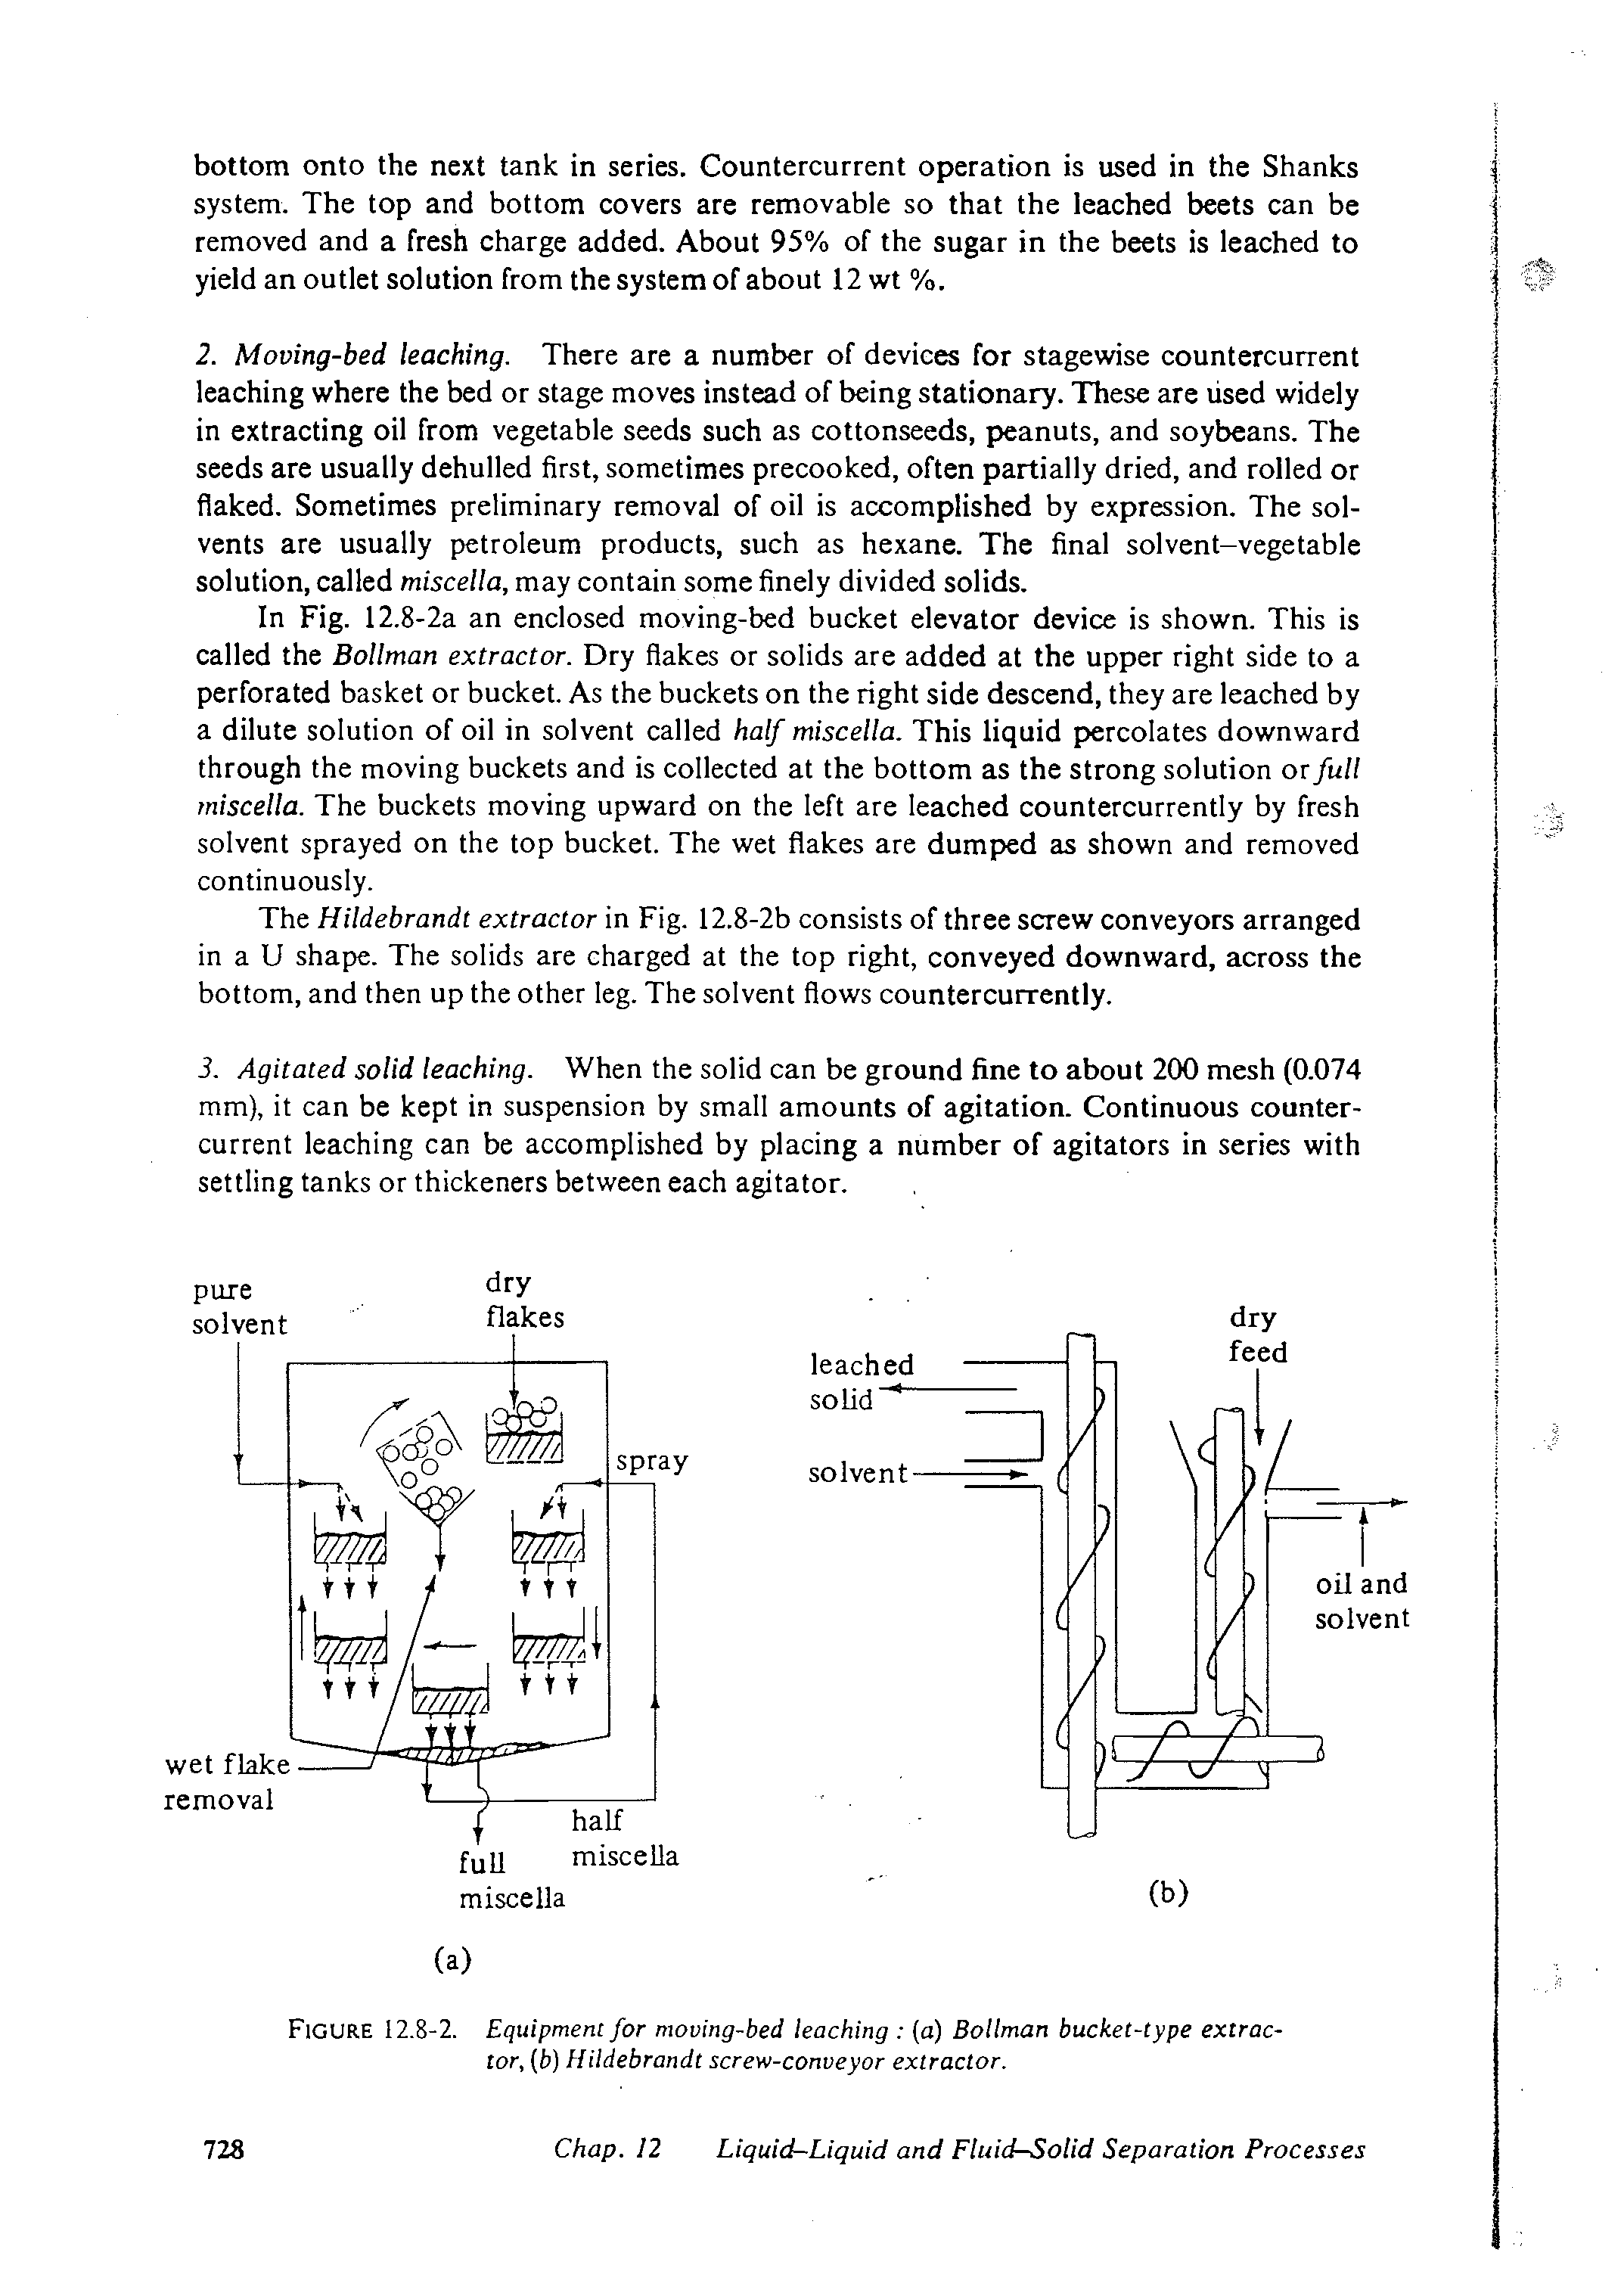 Figure 12.8-2. Equipment for moving-bed leaching [a) Bollman bucket-type extractor, (b) Hildebrandt screw-conveyor extractor.